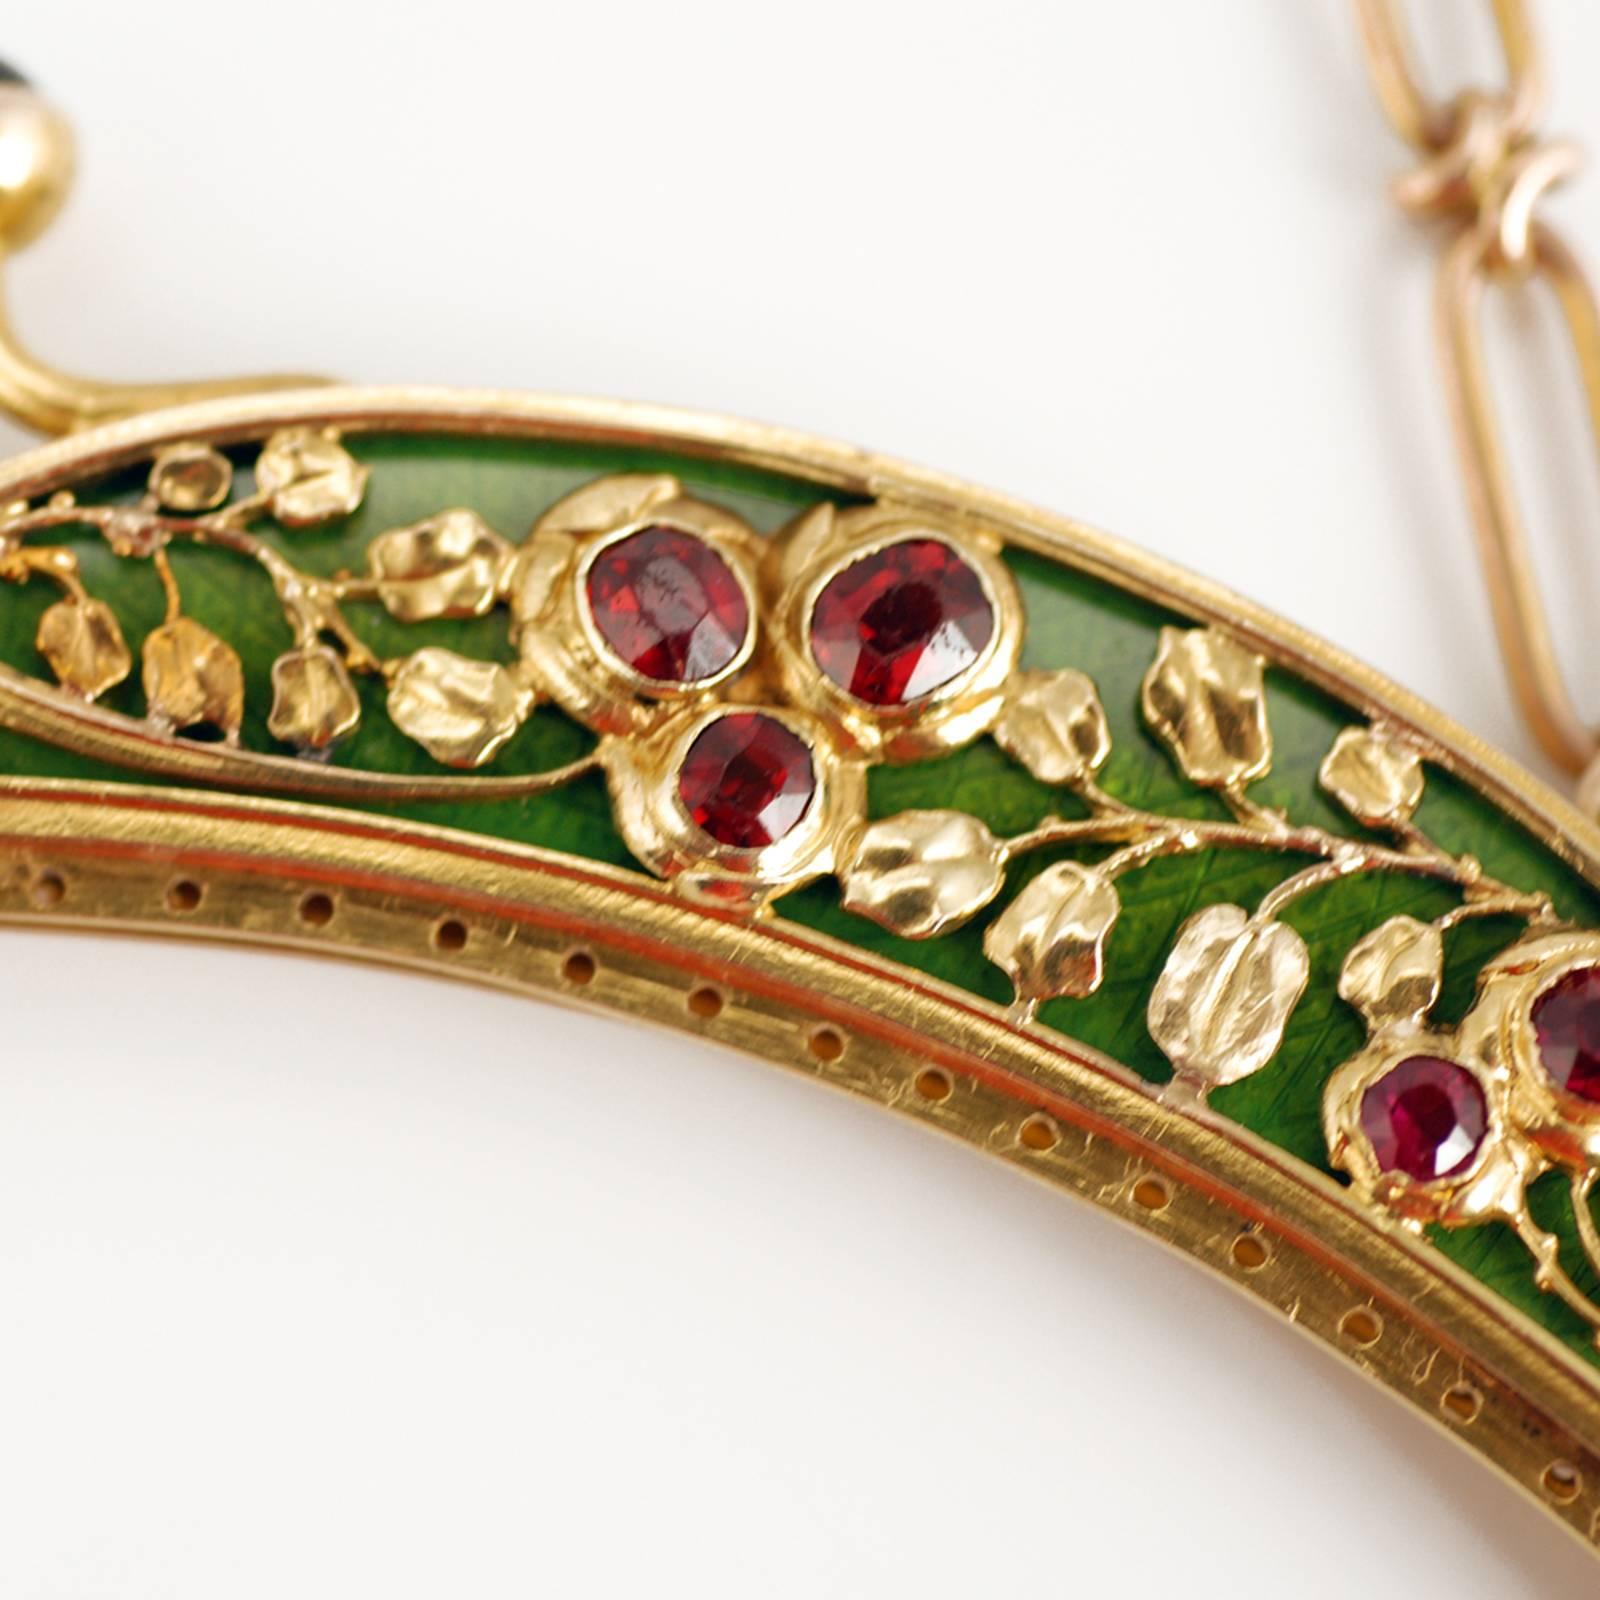 Art Nouveau Russian Imperial Antique Jeweled Varicolor Gold and Guilloché Enamel Purse Frame